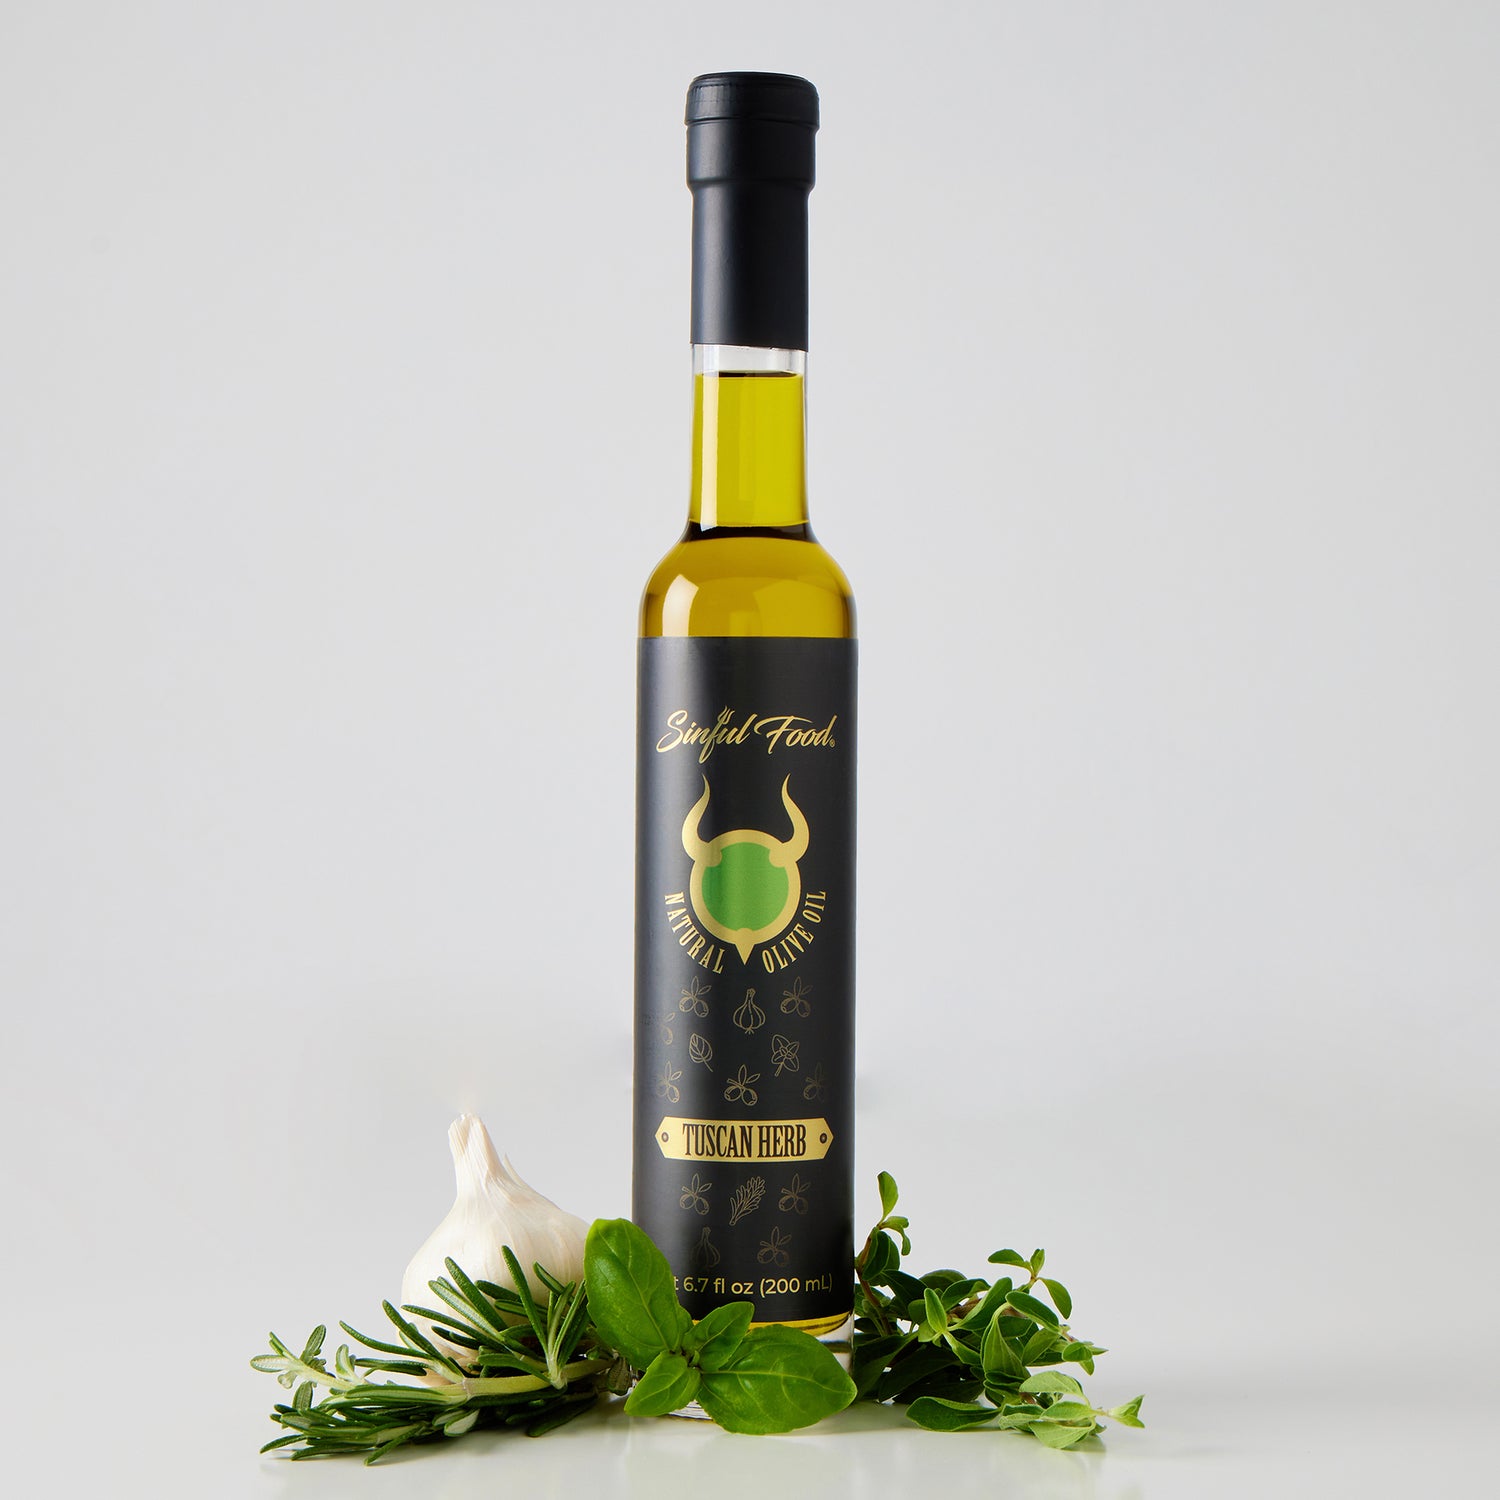 Infused Olive Oils